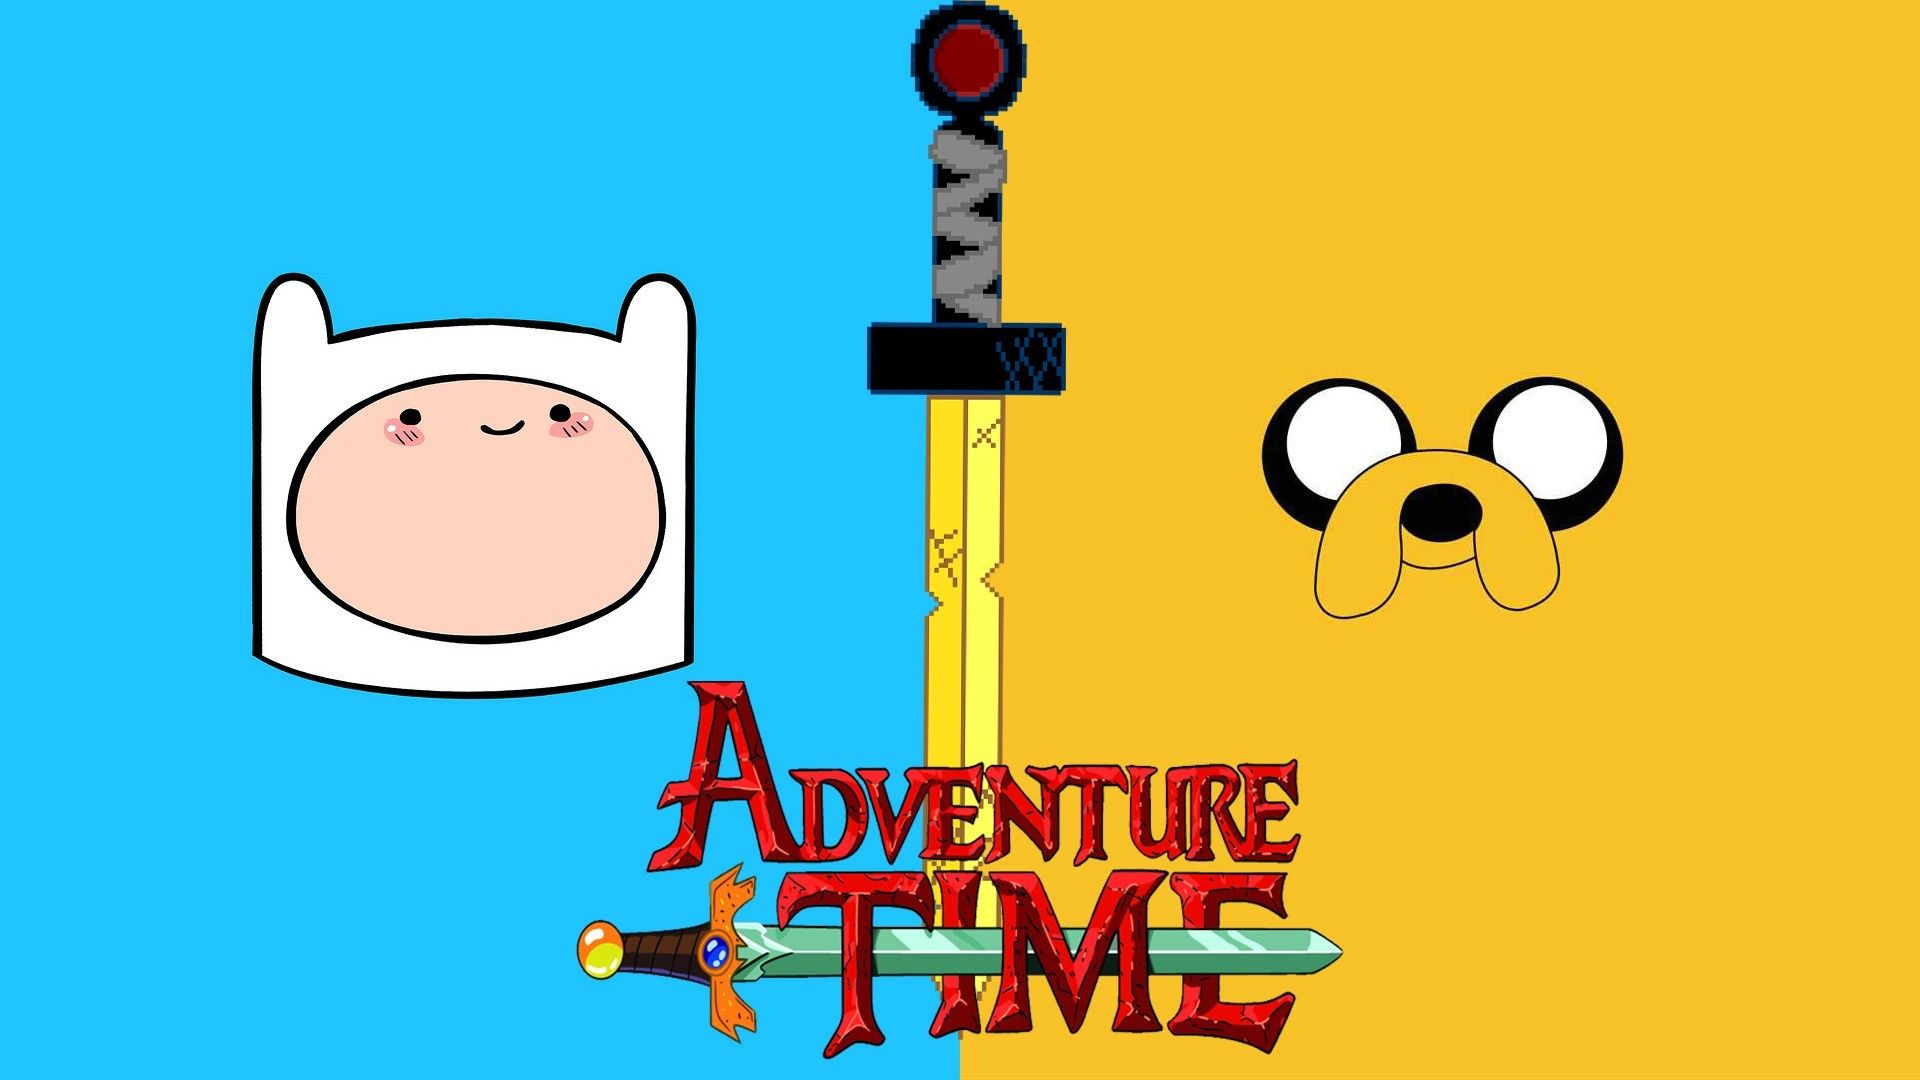 Adventure Time wallpaperDownload free beautiful High